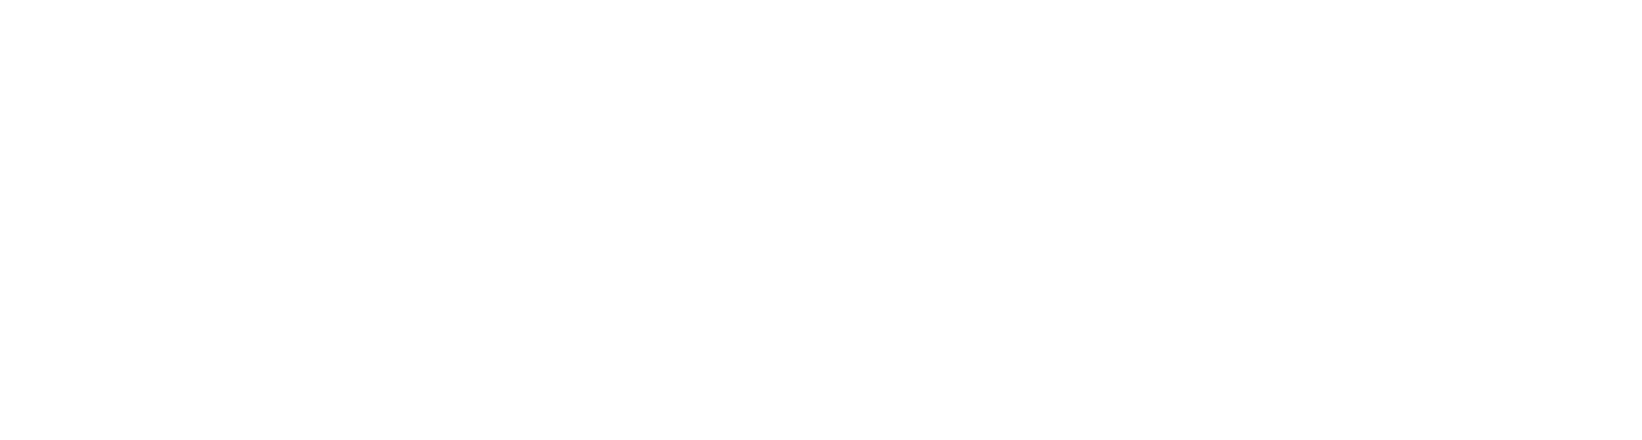 Coldwell Banker Neumann Real Estate Brokerage